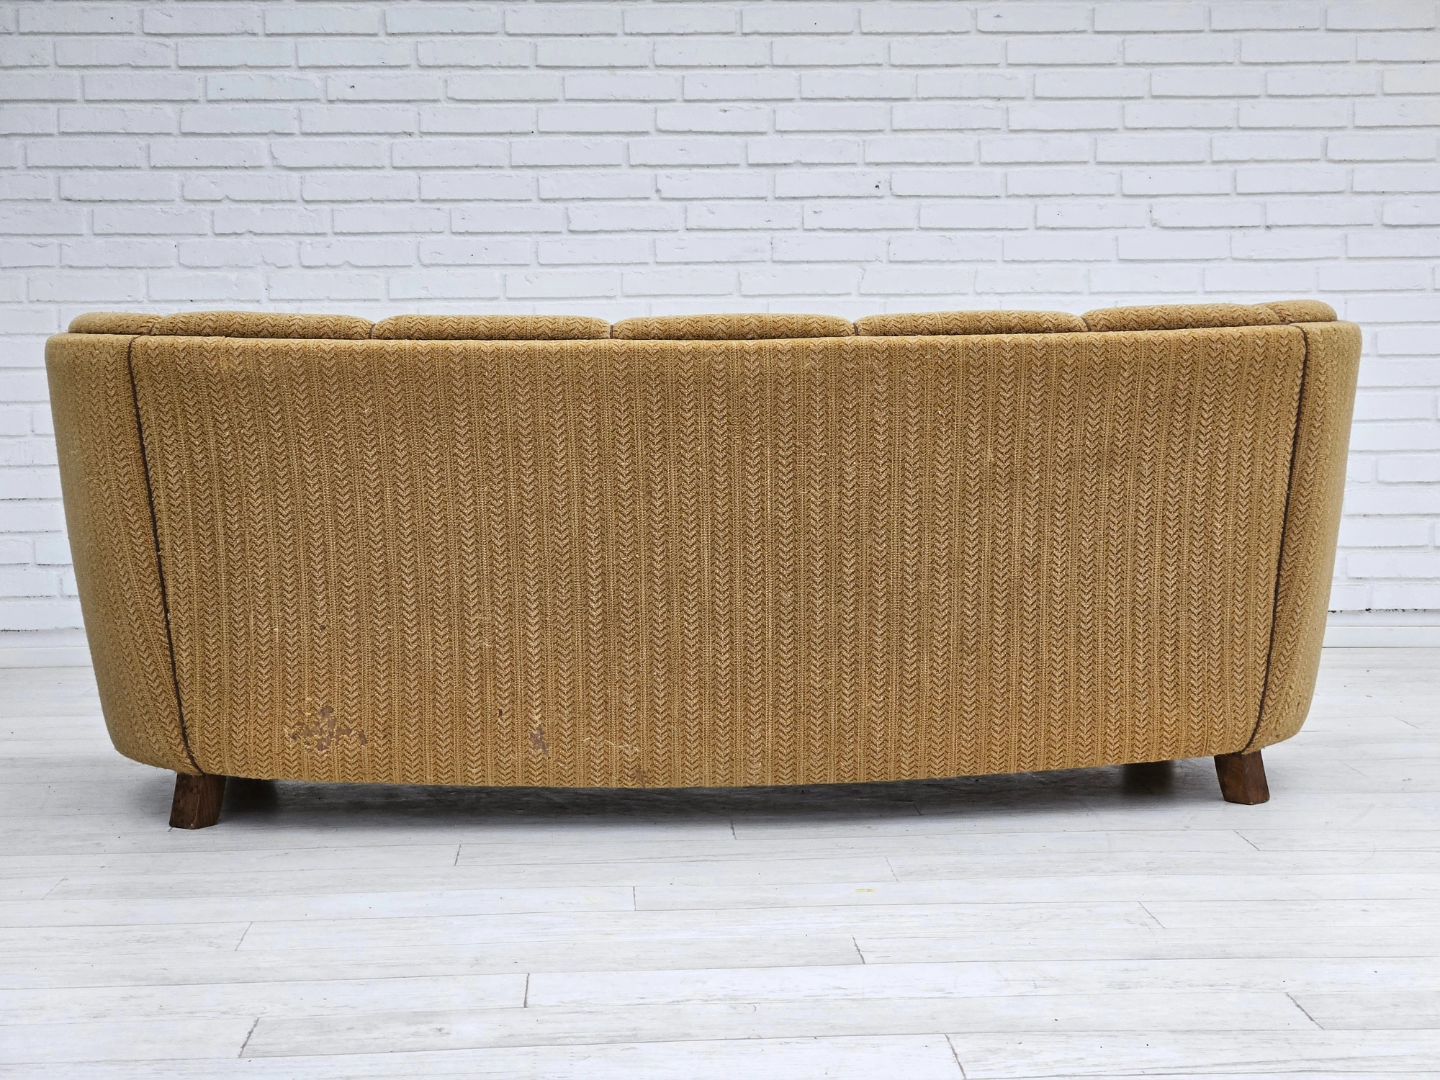 1960s, Danish vintage 3 seater "Banana" sofa, original condition.